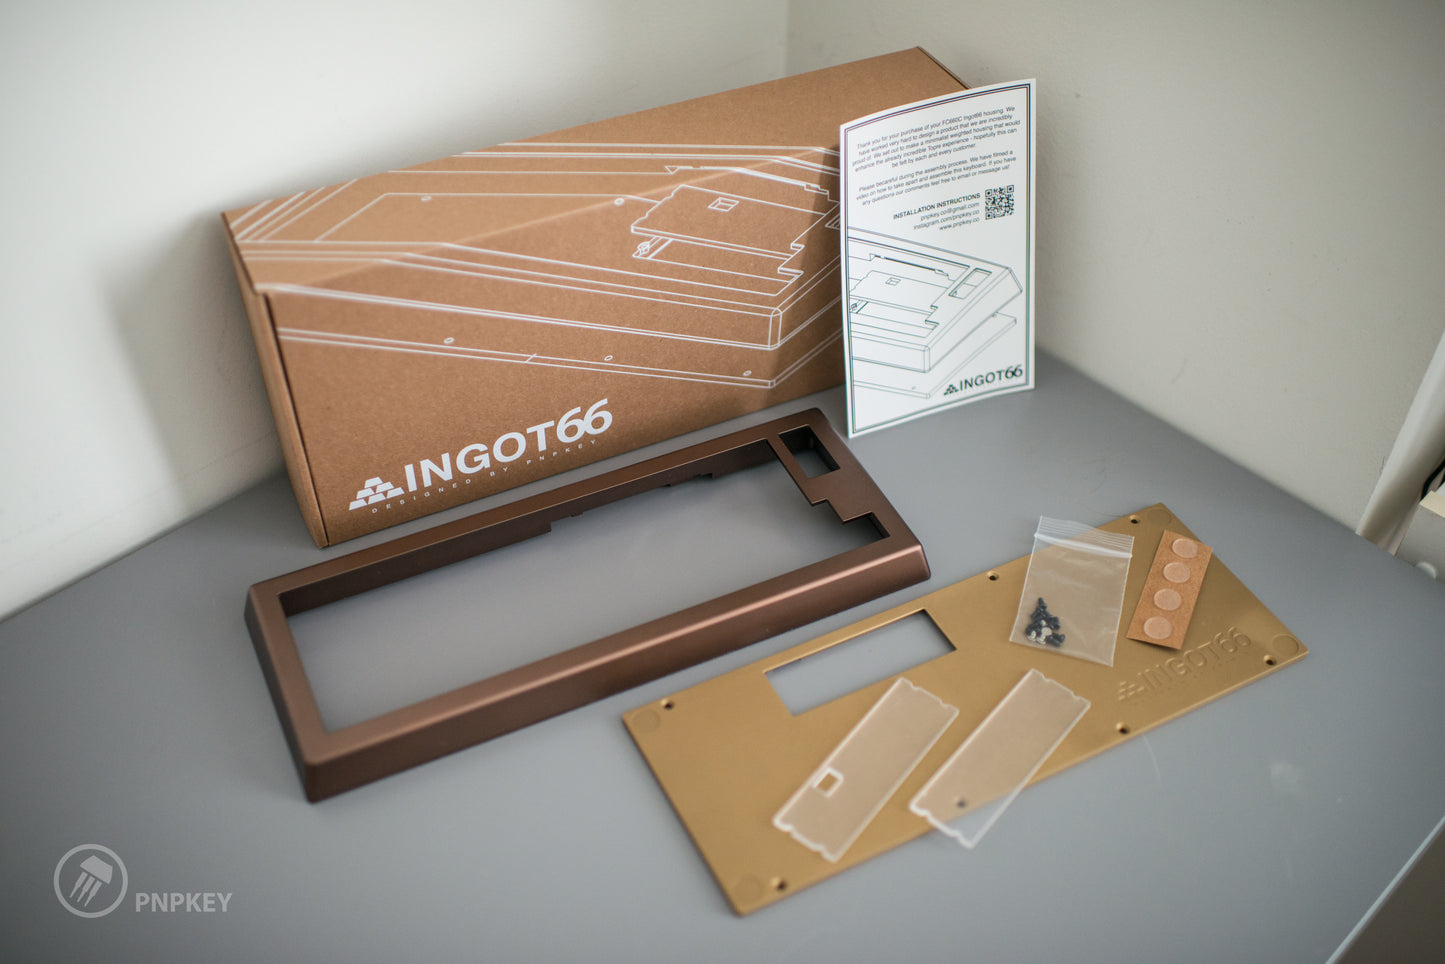 INGOT66 FC660C Case